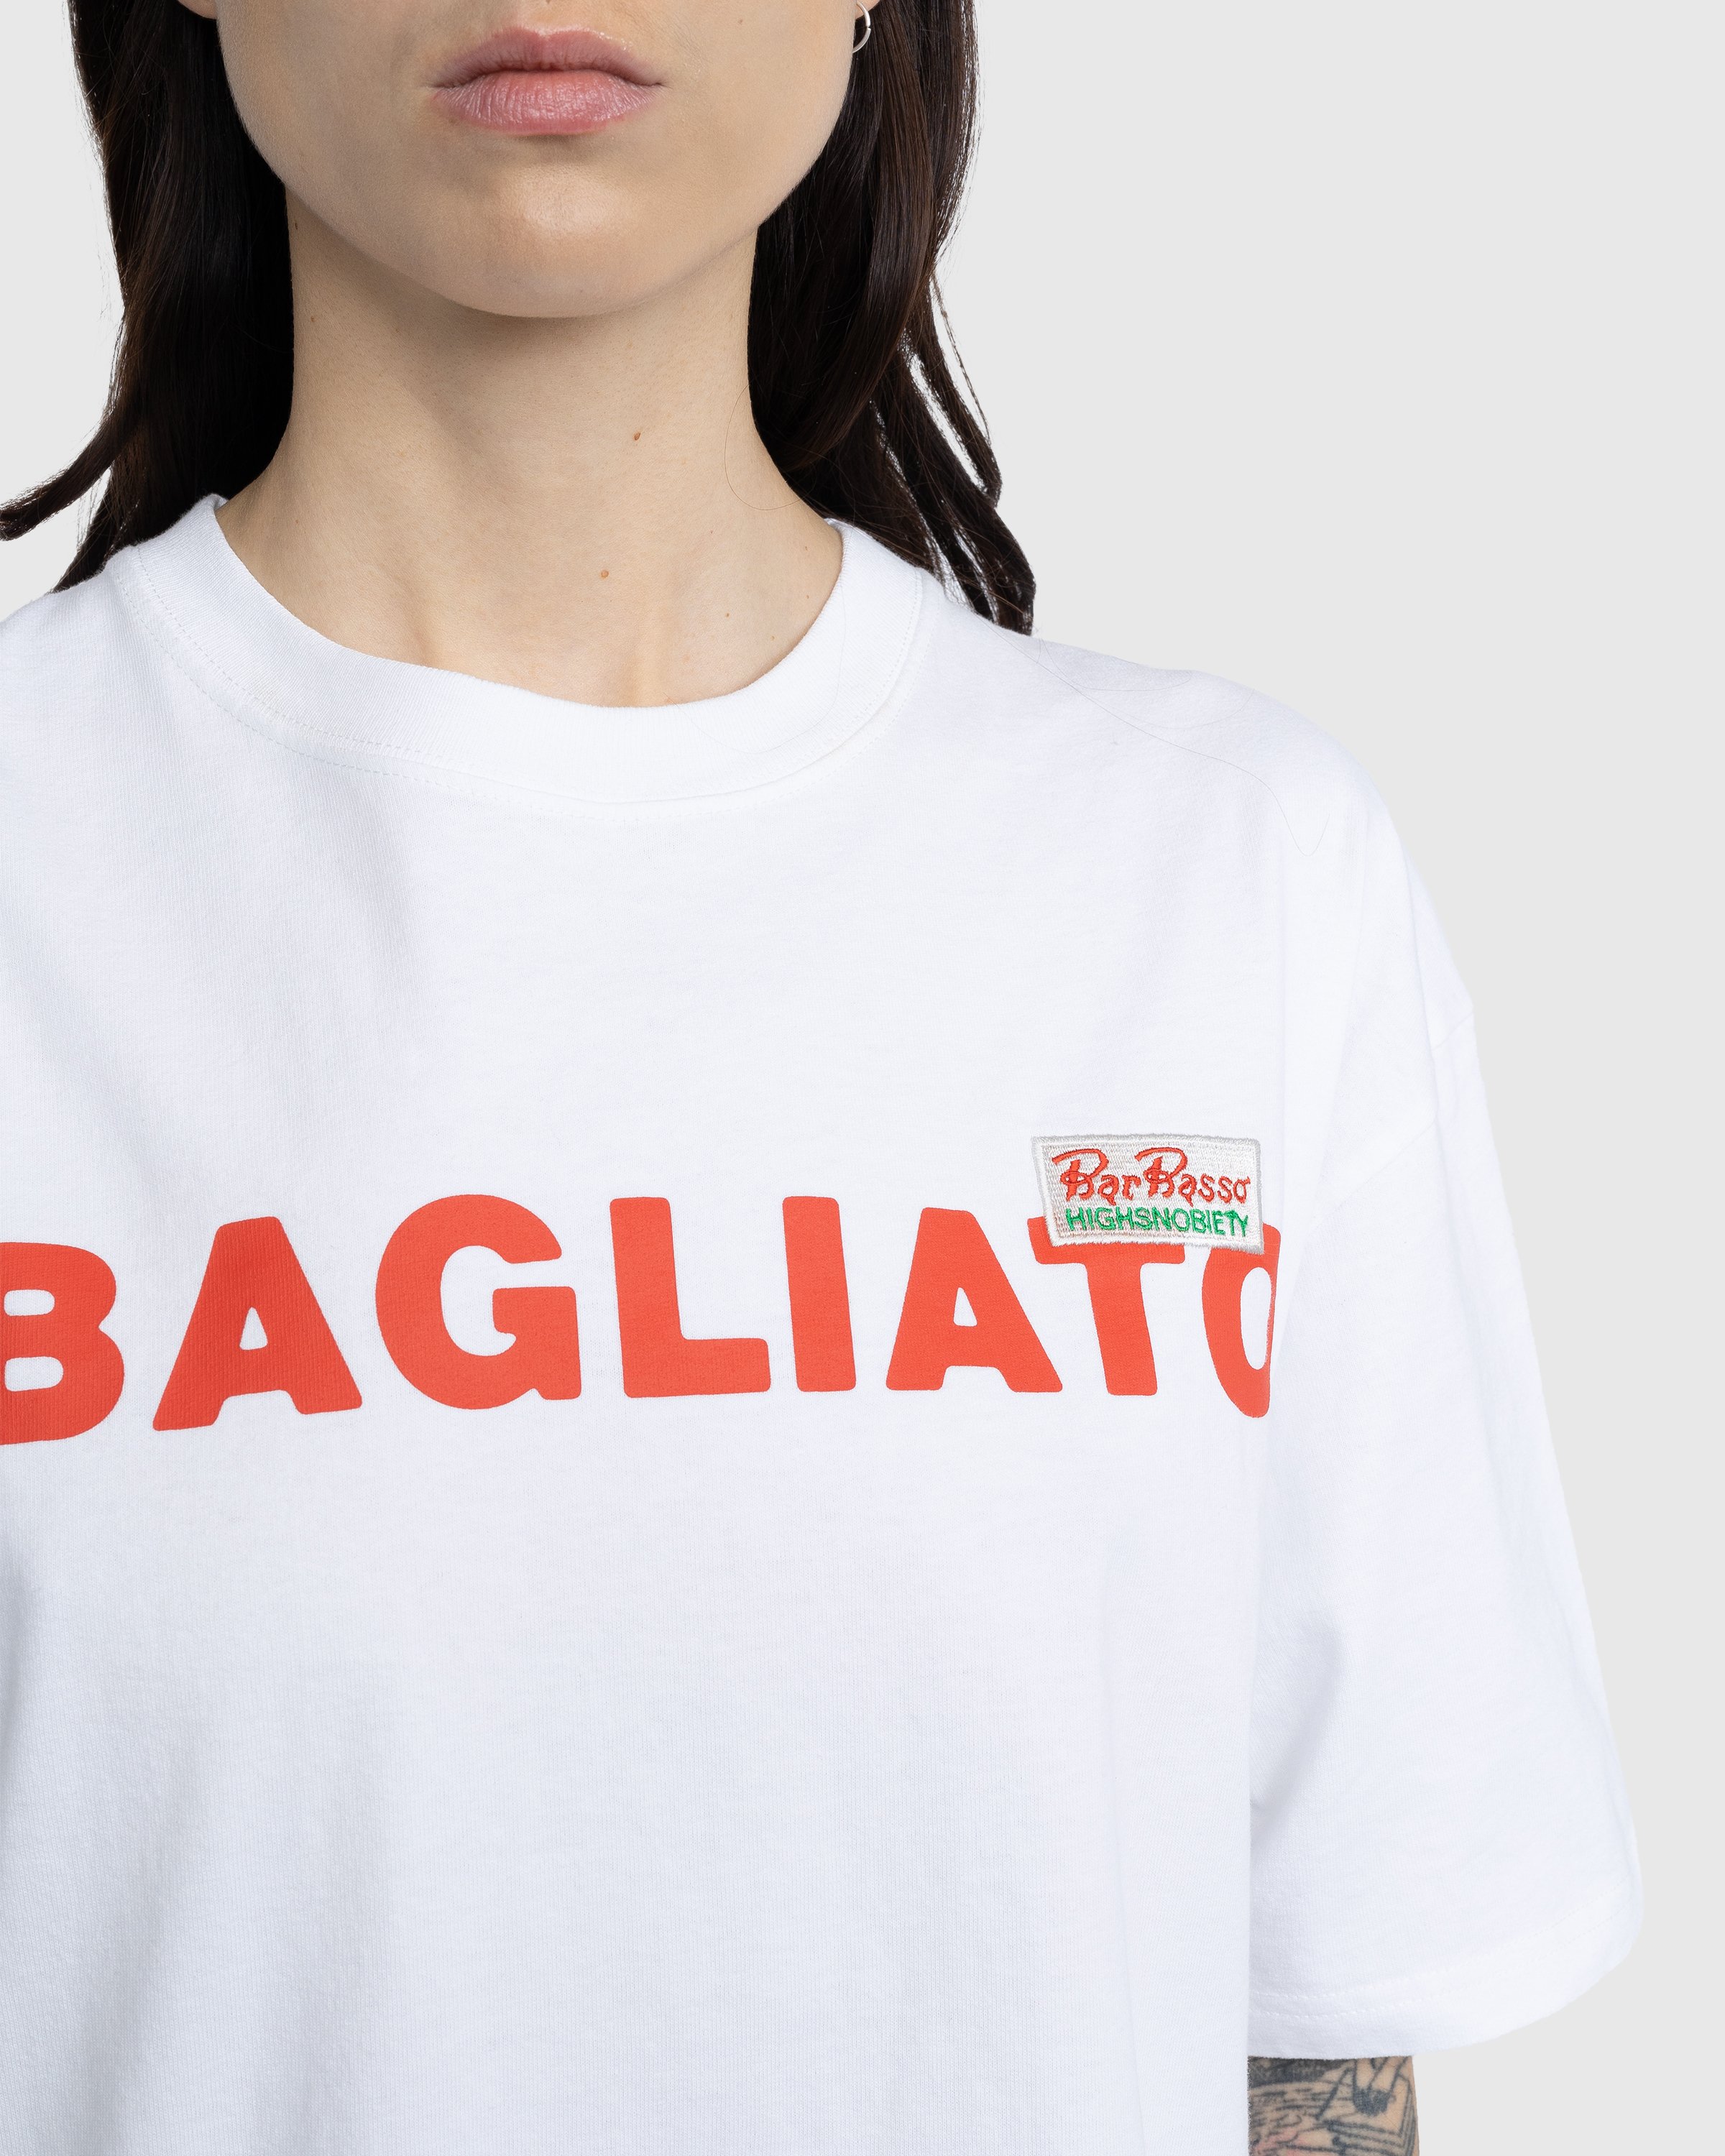 Bar Basso x Highsnobiety - Sbagliato T-Shirt White - Clothing - White - Image 8